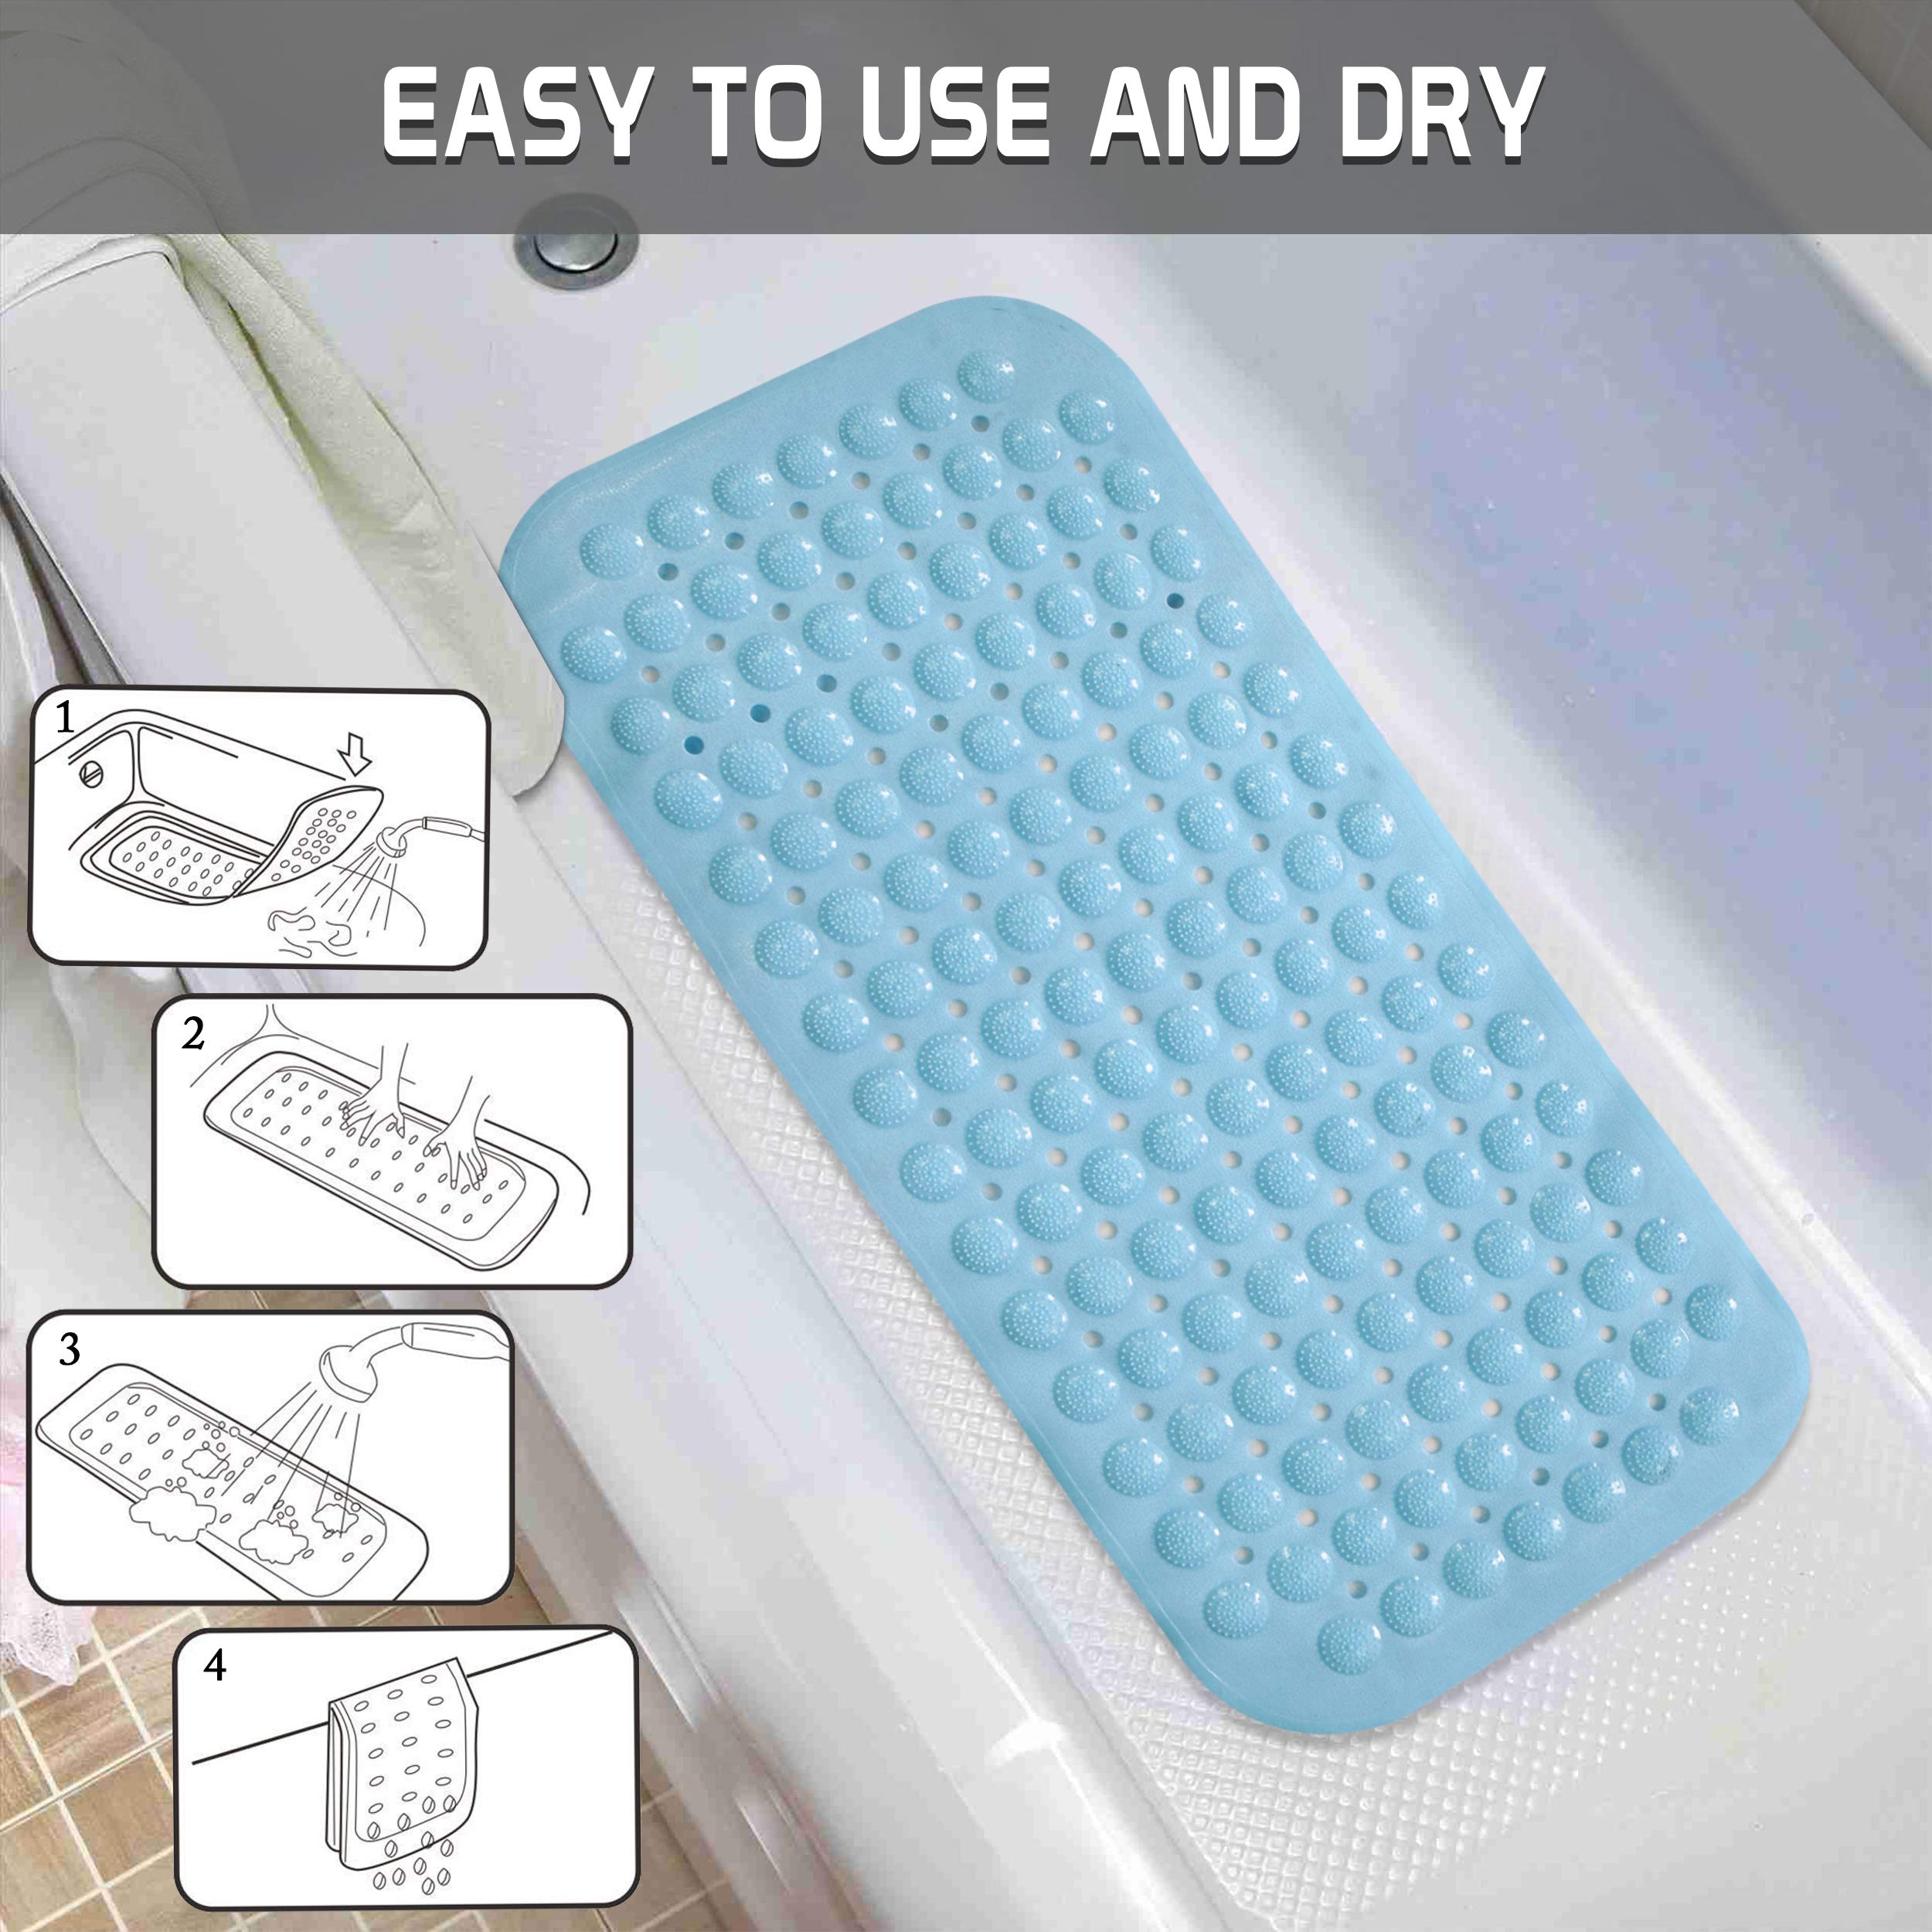 PVC Shower Mat Anti-Slip with Massage Acupressure Points, 36x71 cm, Blue